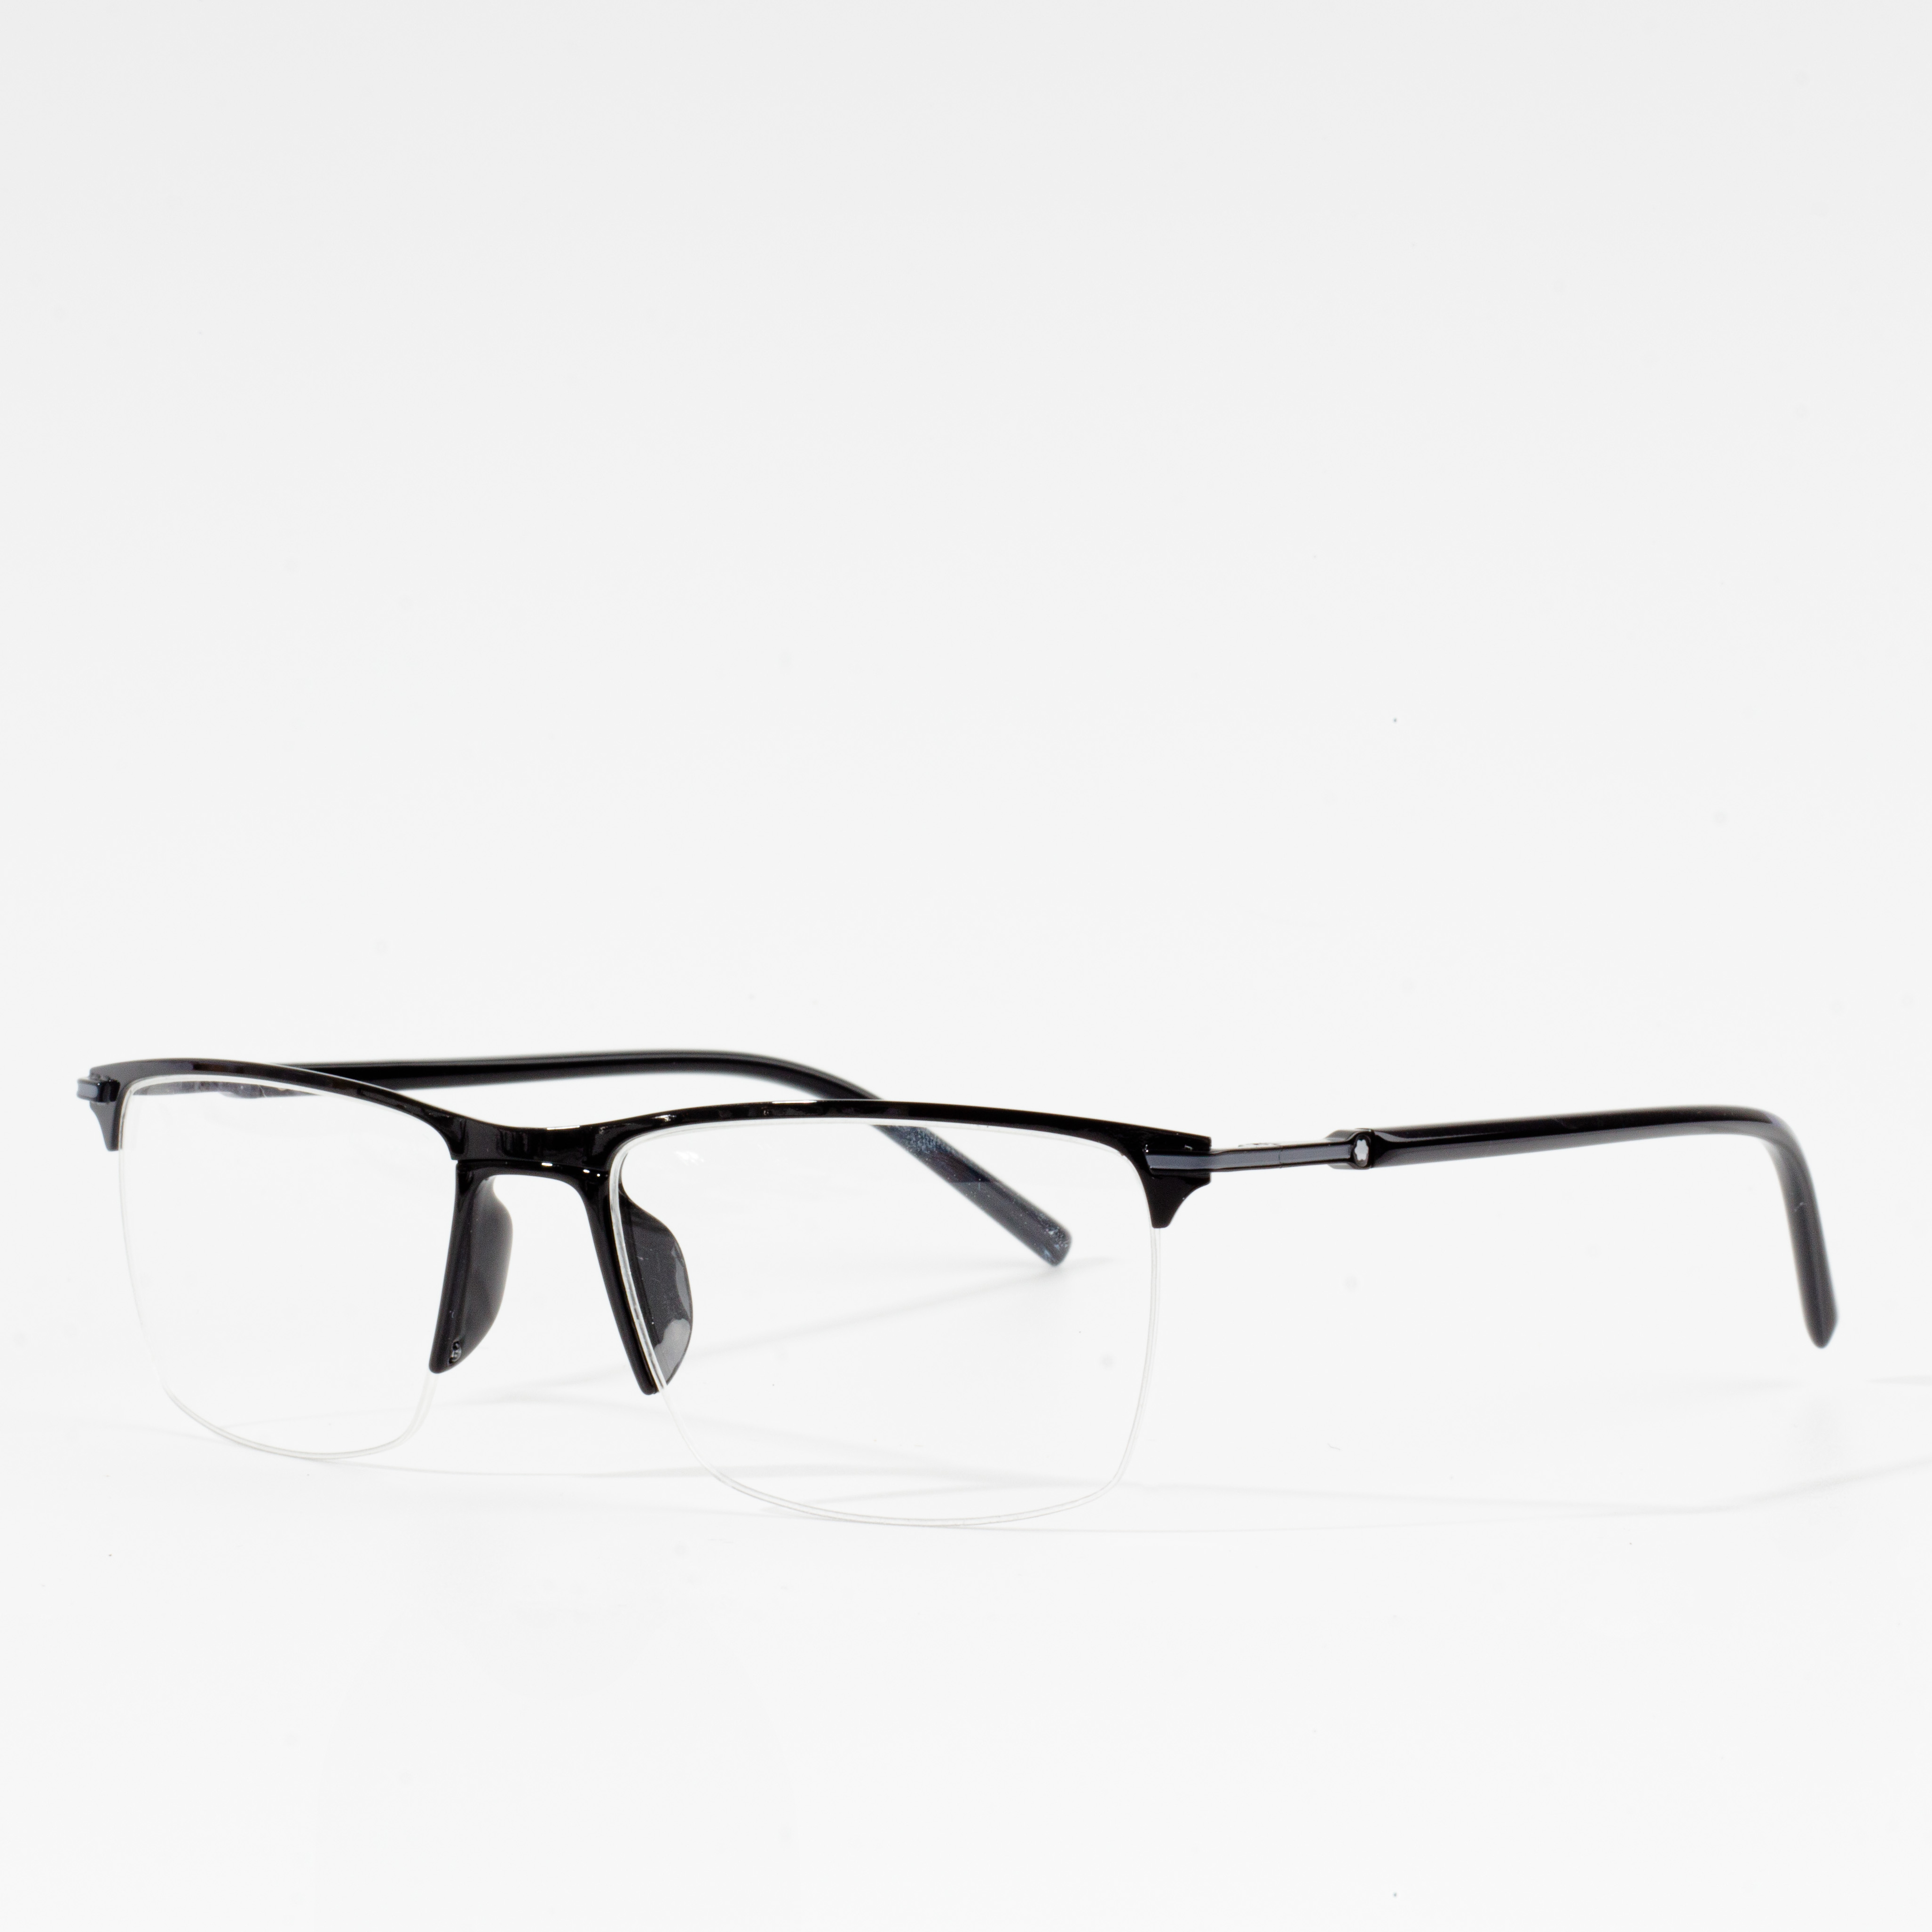 spectacle Optical Eyeglasses Frames